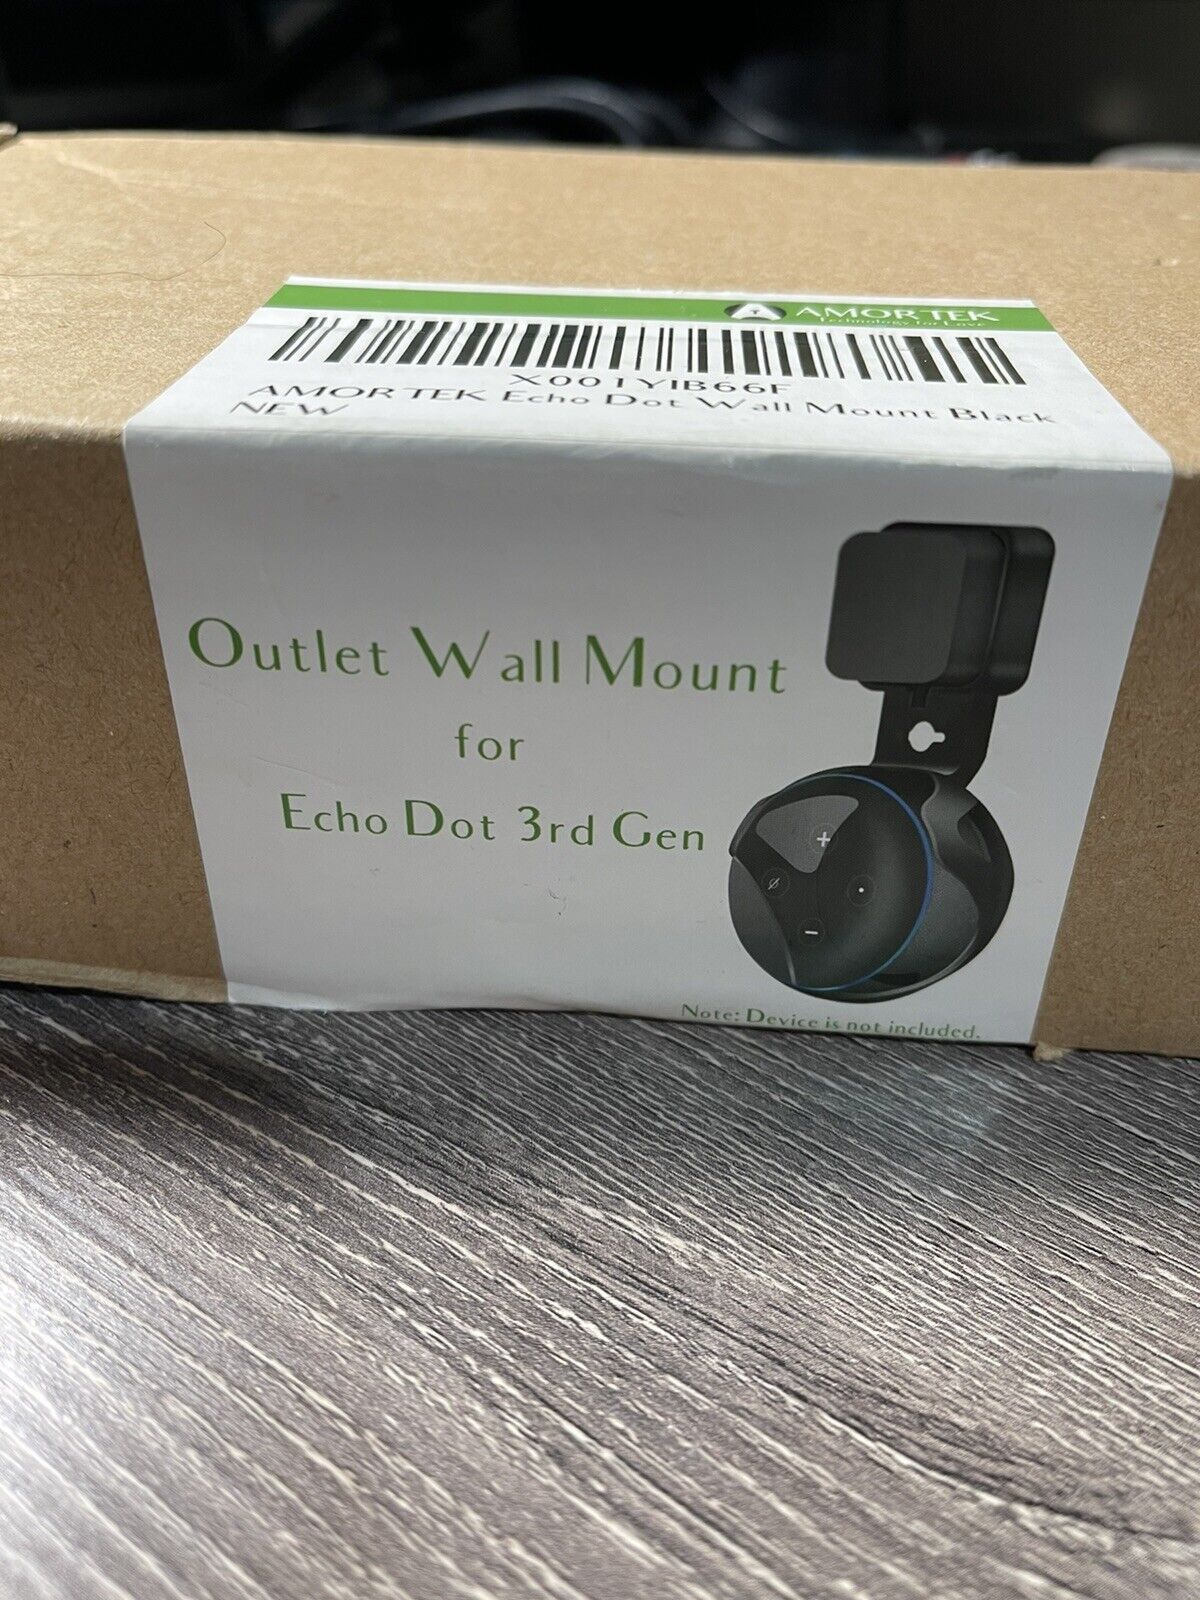 Amazon Echo Dot 3rd Generation Outlet Wall Mount Black Holder Bracket